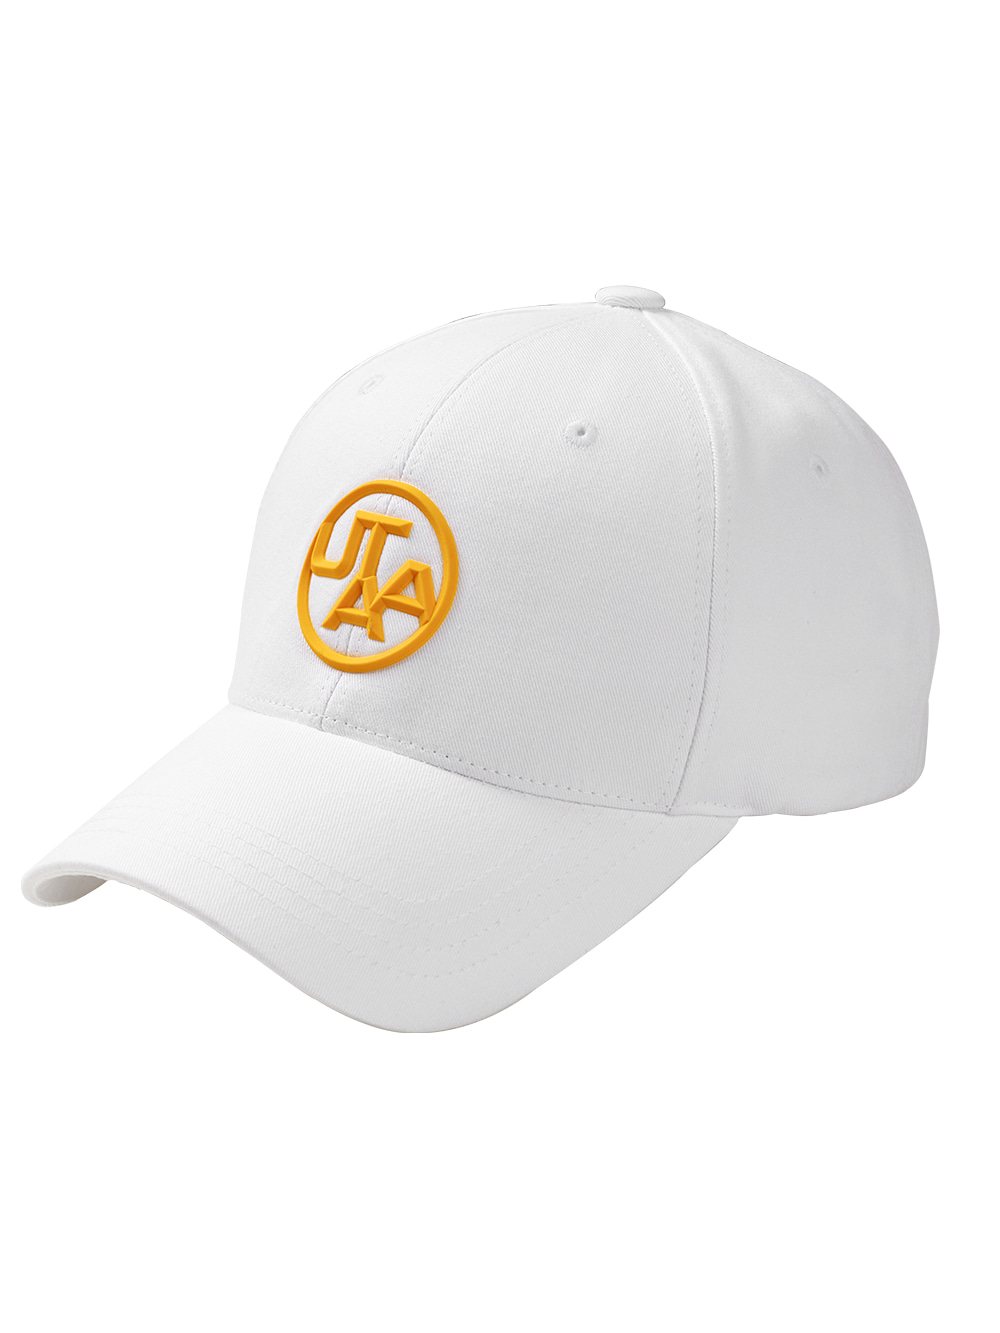 UTAA Emblem Figure White Cap : Neon Yellow (UA0GCU119YE)